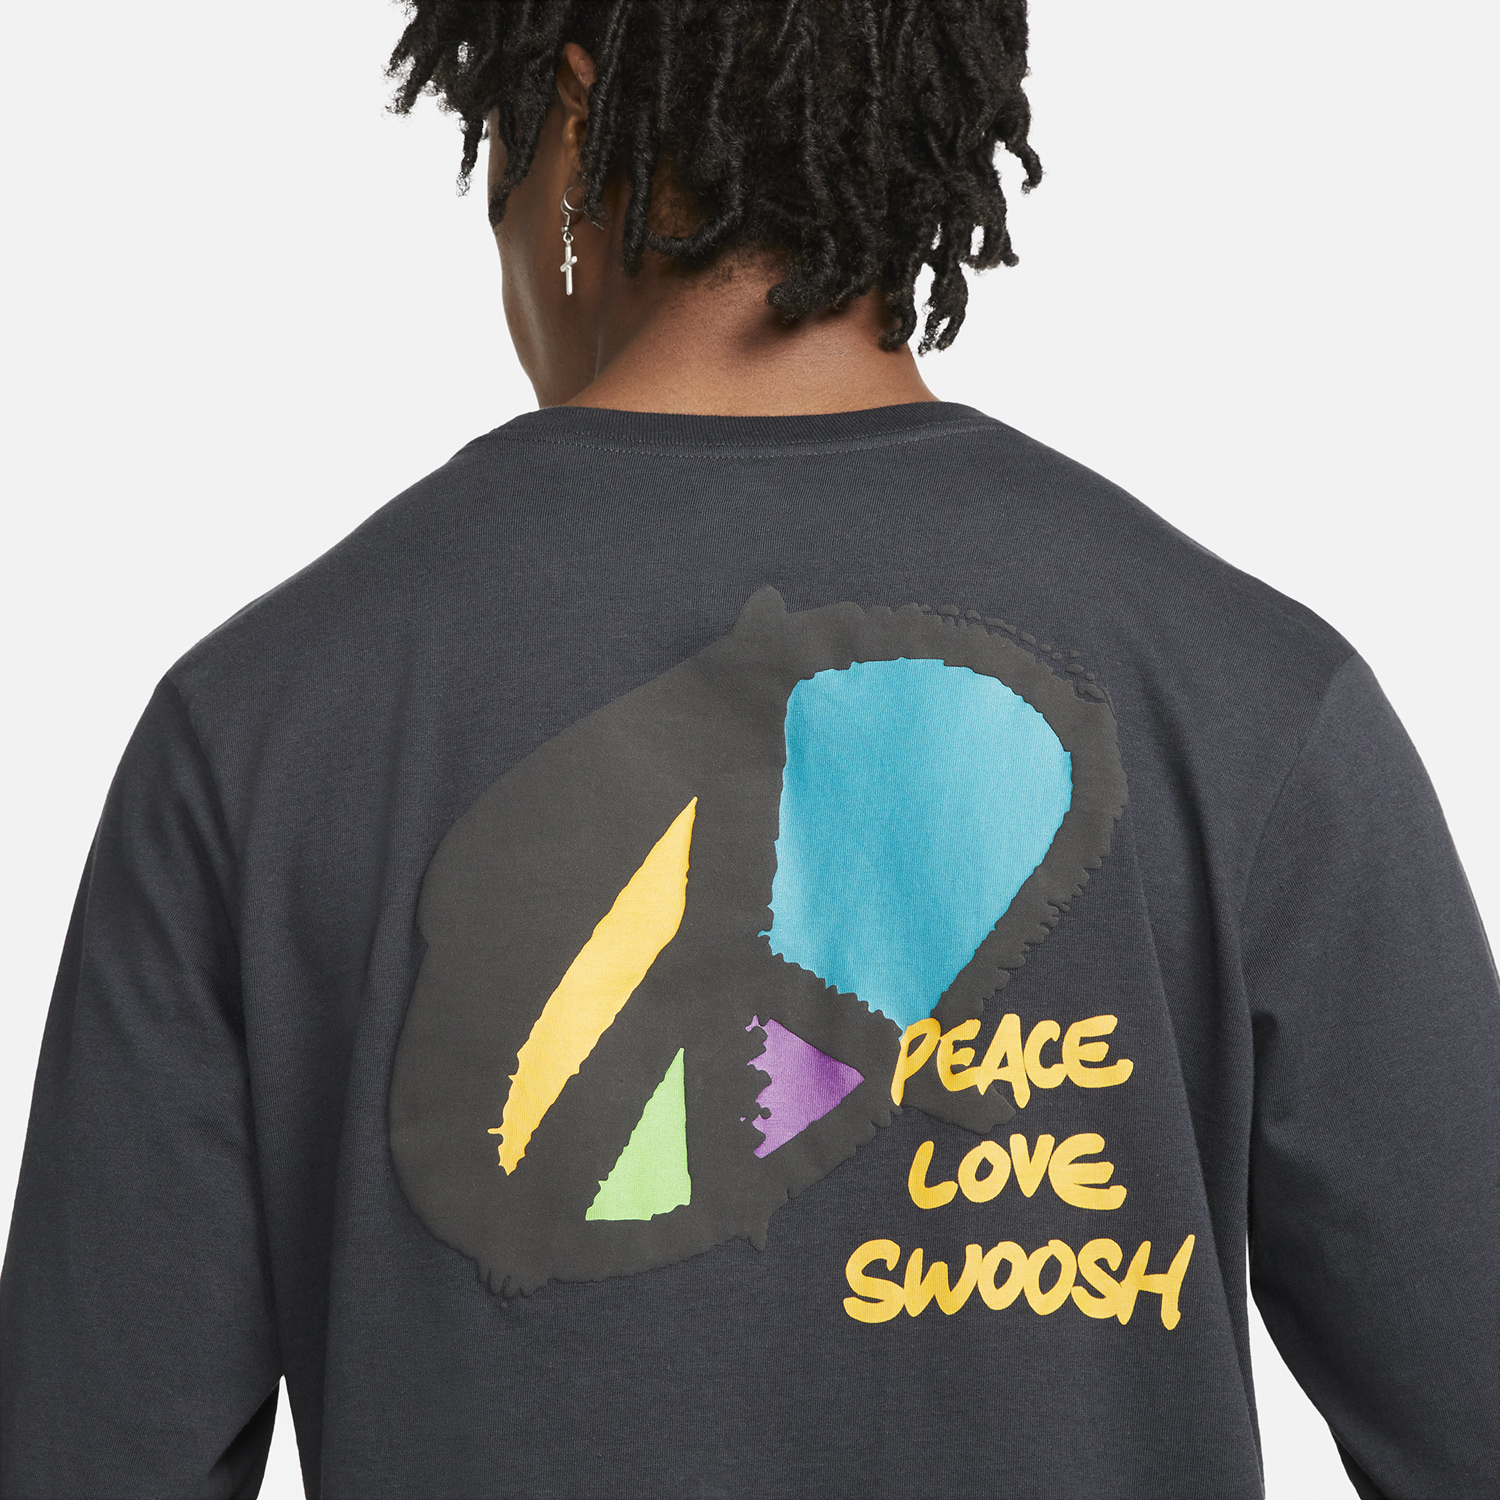 nike-peace-love-swoosh-long-sleeve-shirt-4